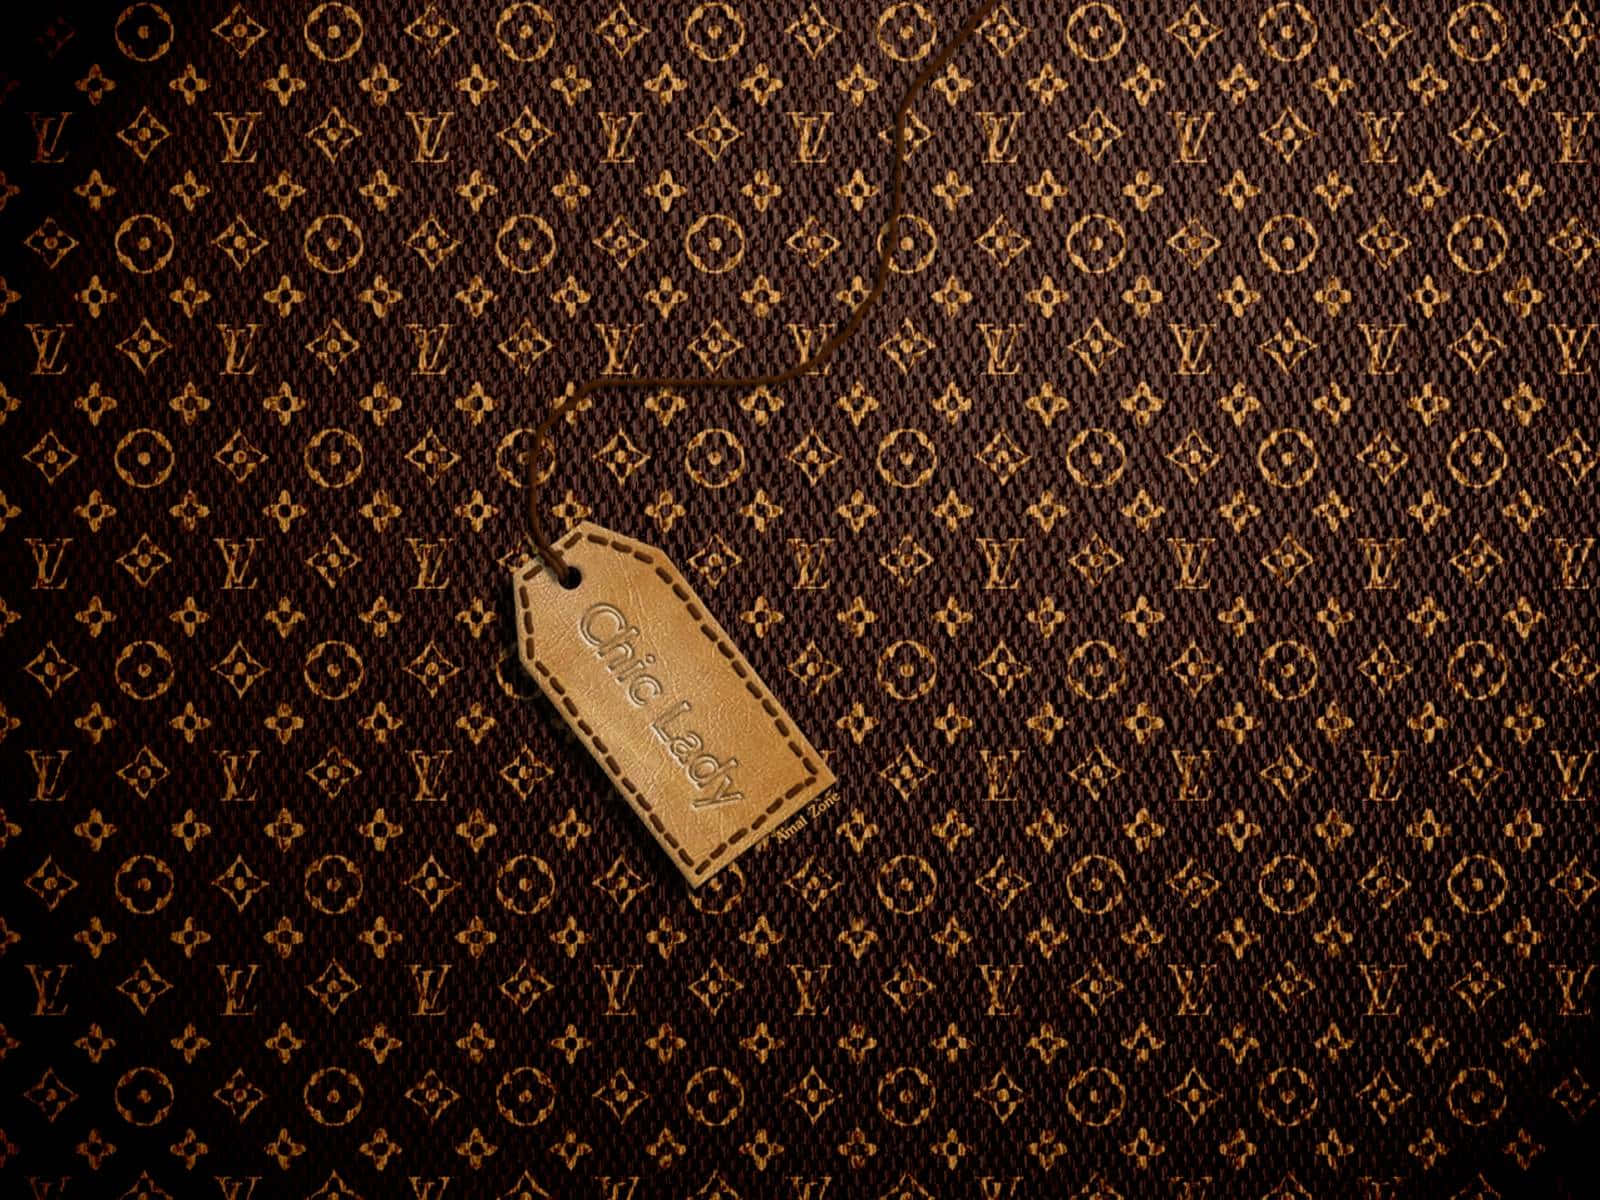 Louis Vuitton Print Chic Lady Tagteig Tapet: Udskriv et stilfuldt, feminint mønster fra det berømte modehus. Wallpaper